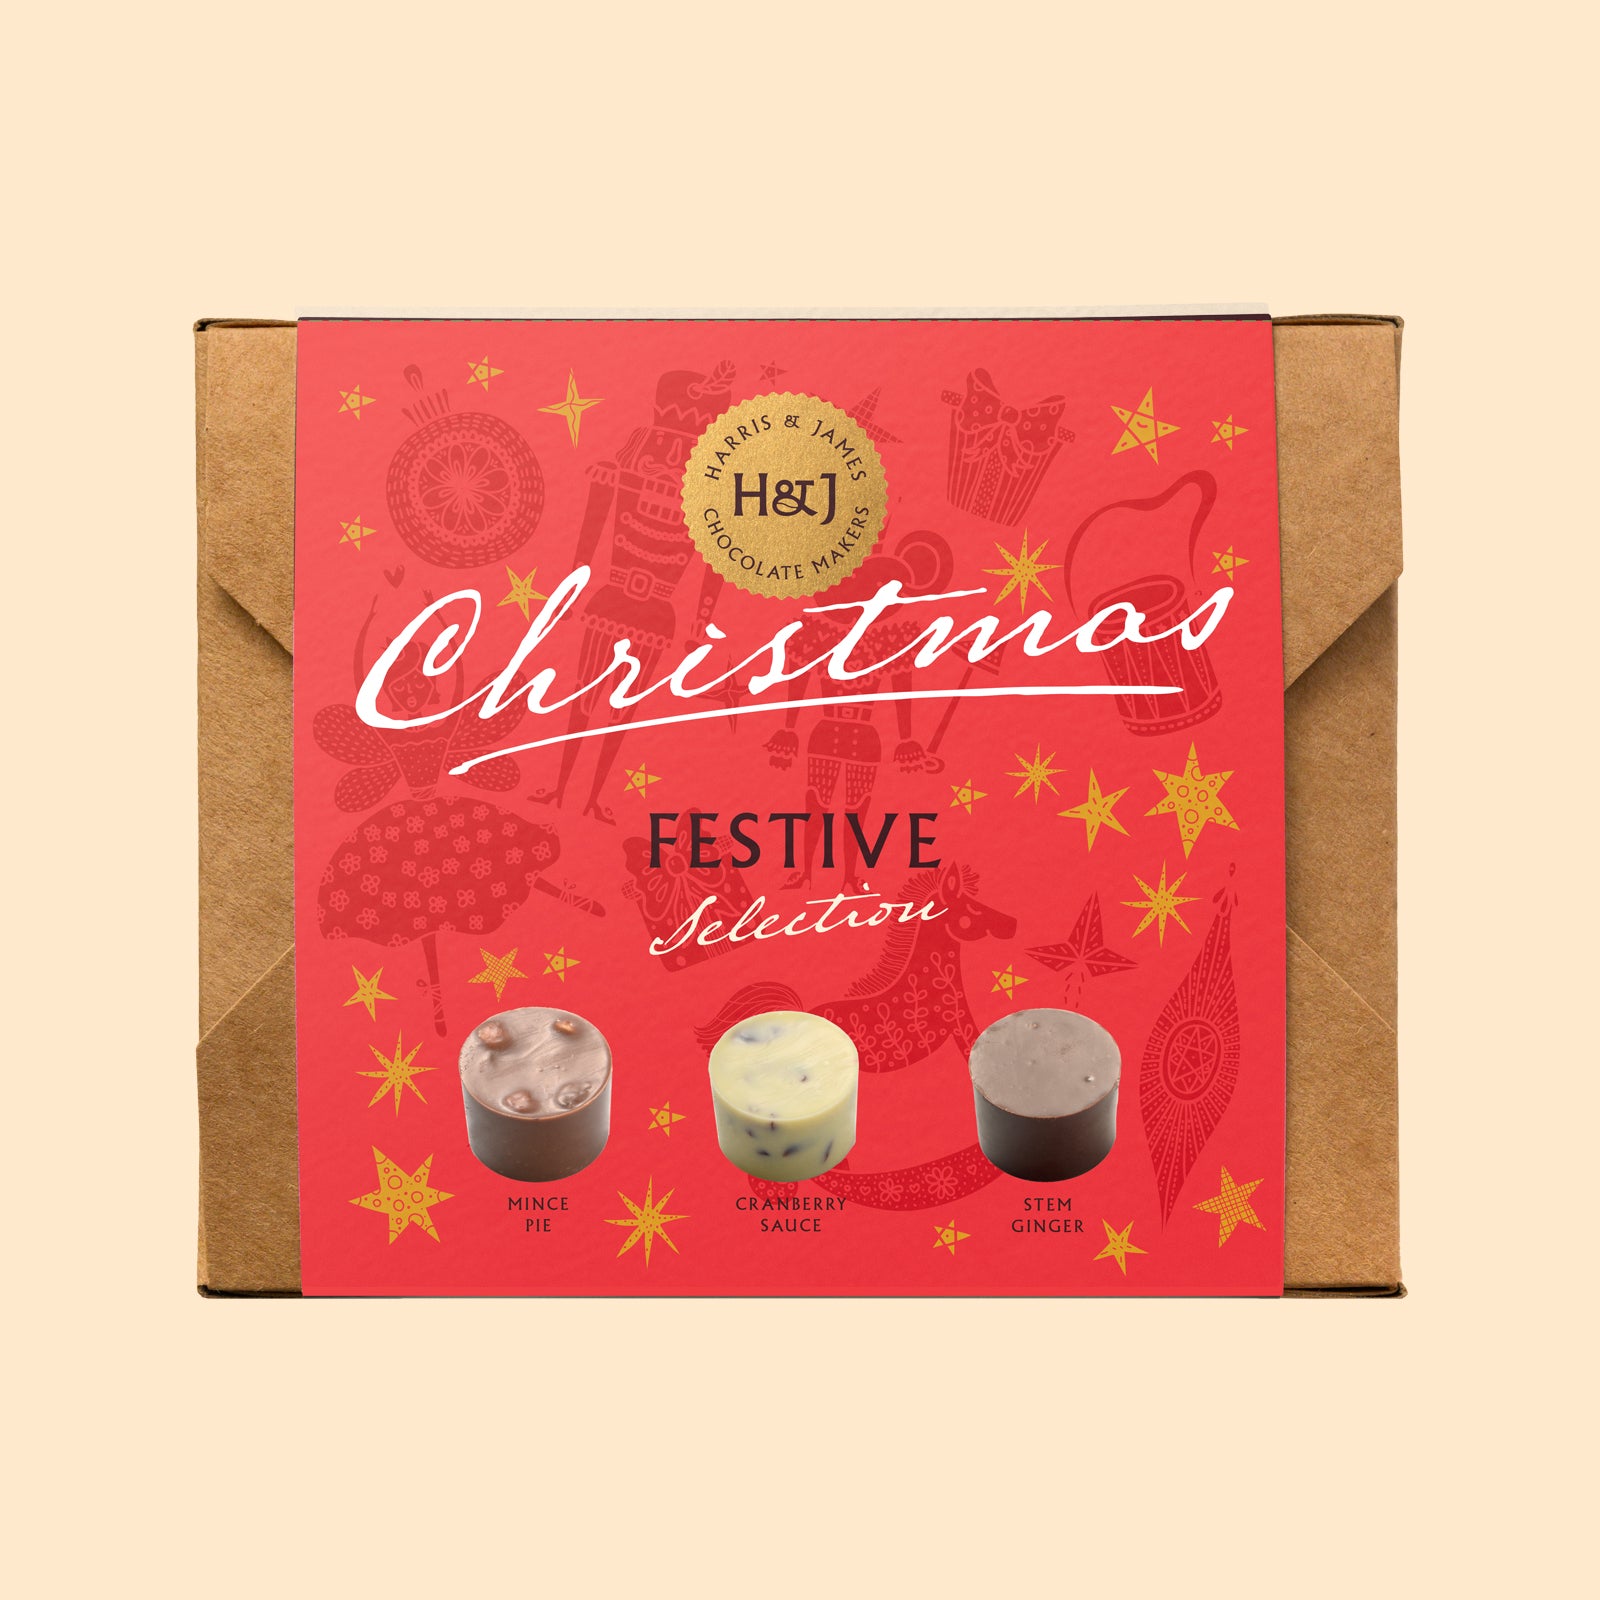 Harris & James- Festive Individual Chocolate Selection Box